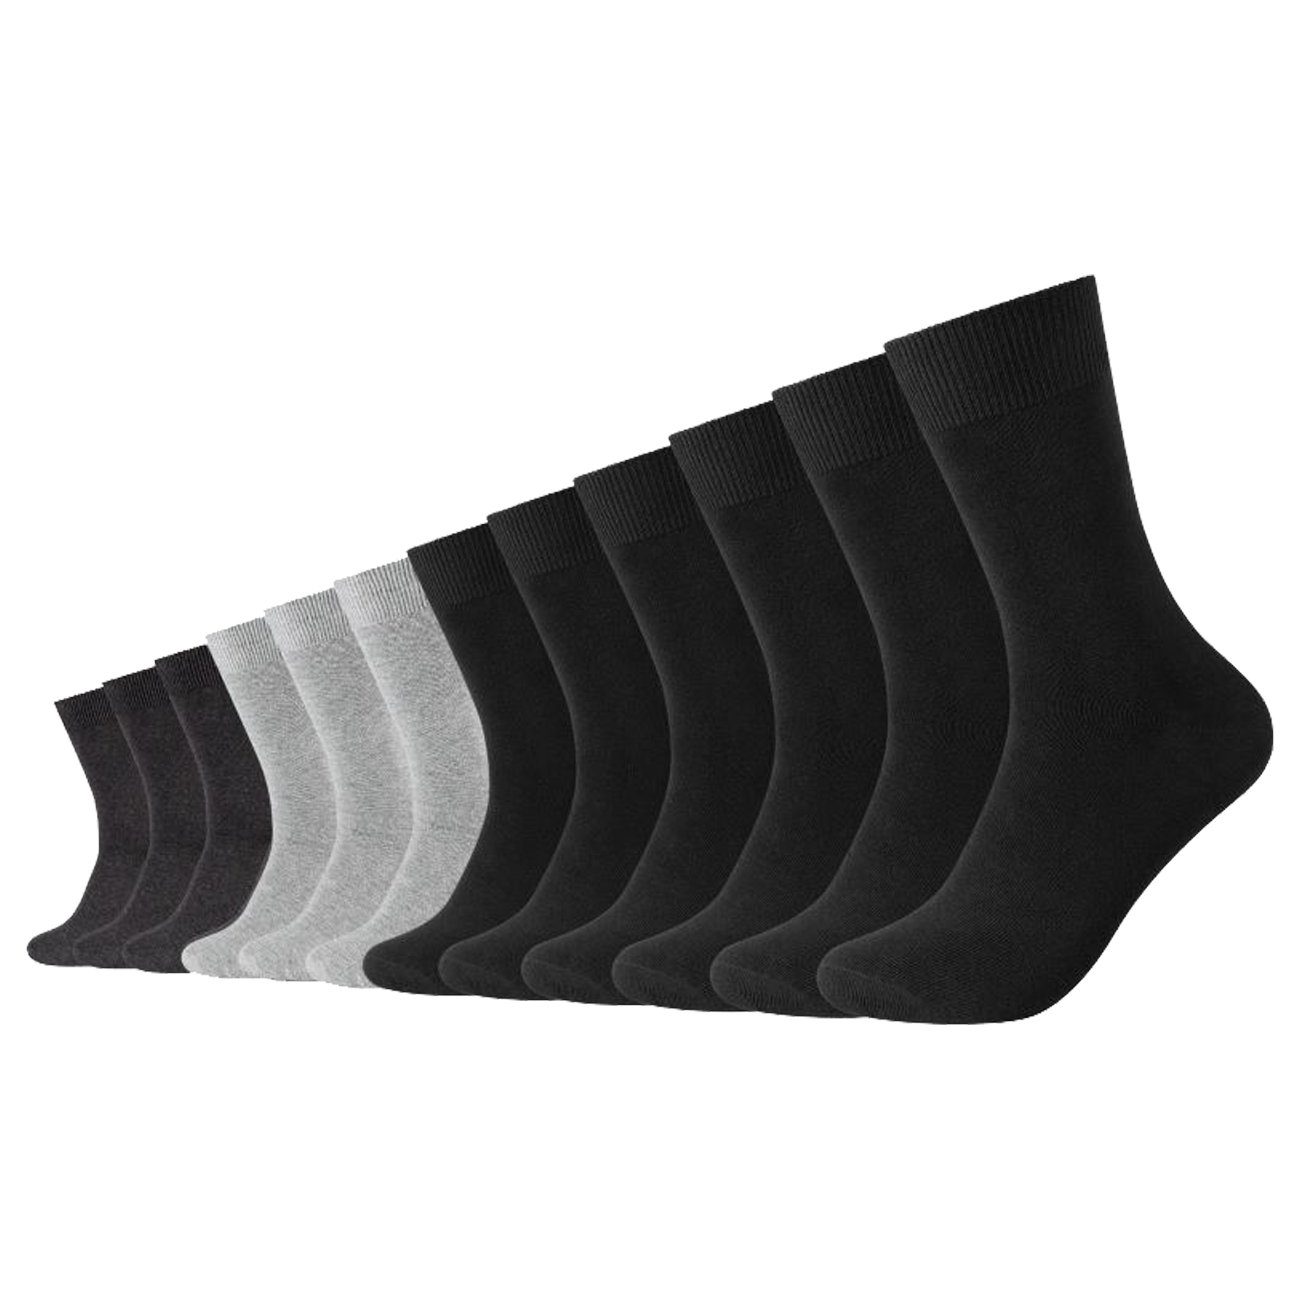 Camano Langsocken Unisex Socken Comfort Cotton Crew (12-Paar) Regularsocken aus pflegeleichter Baumwollmischung Black Mix (9997)